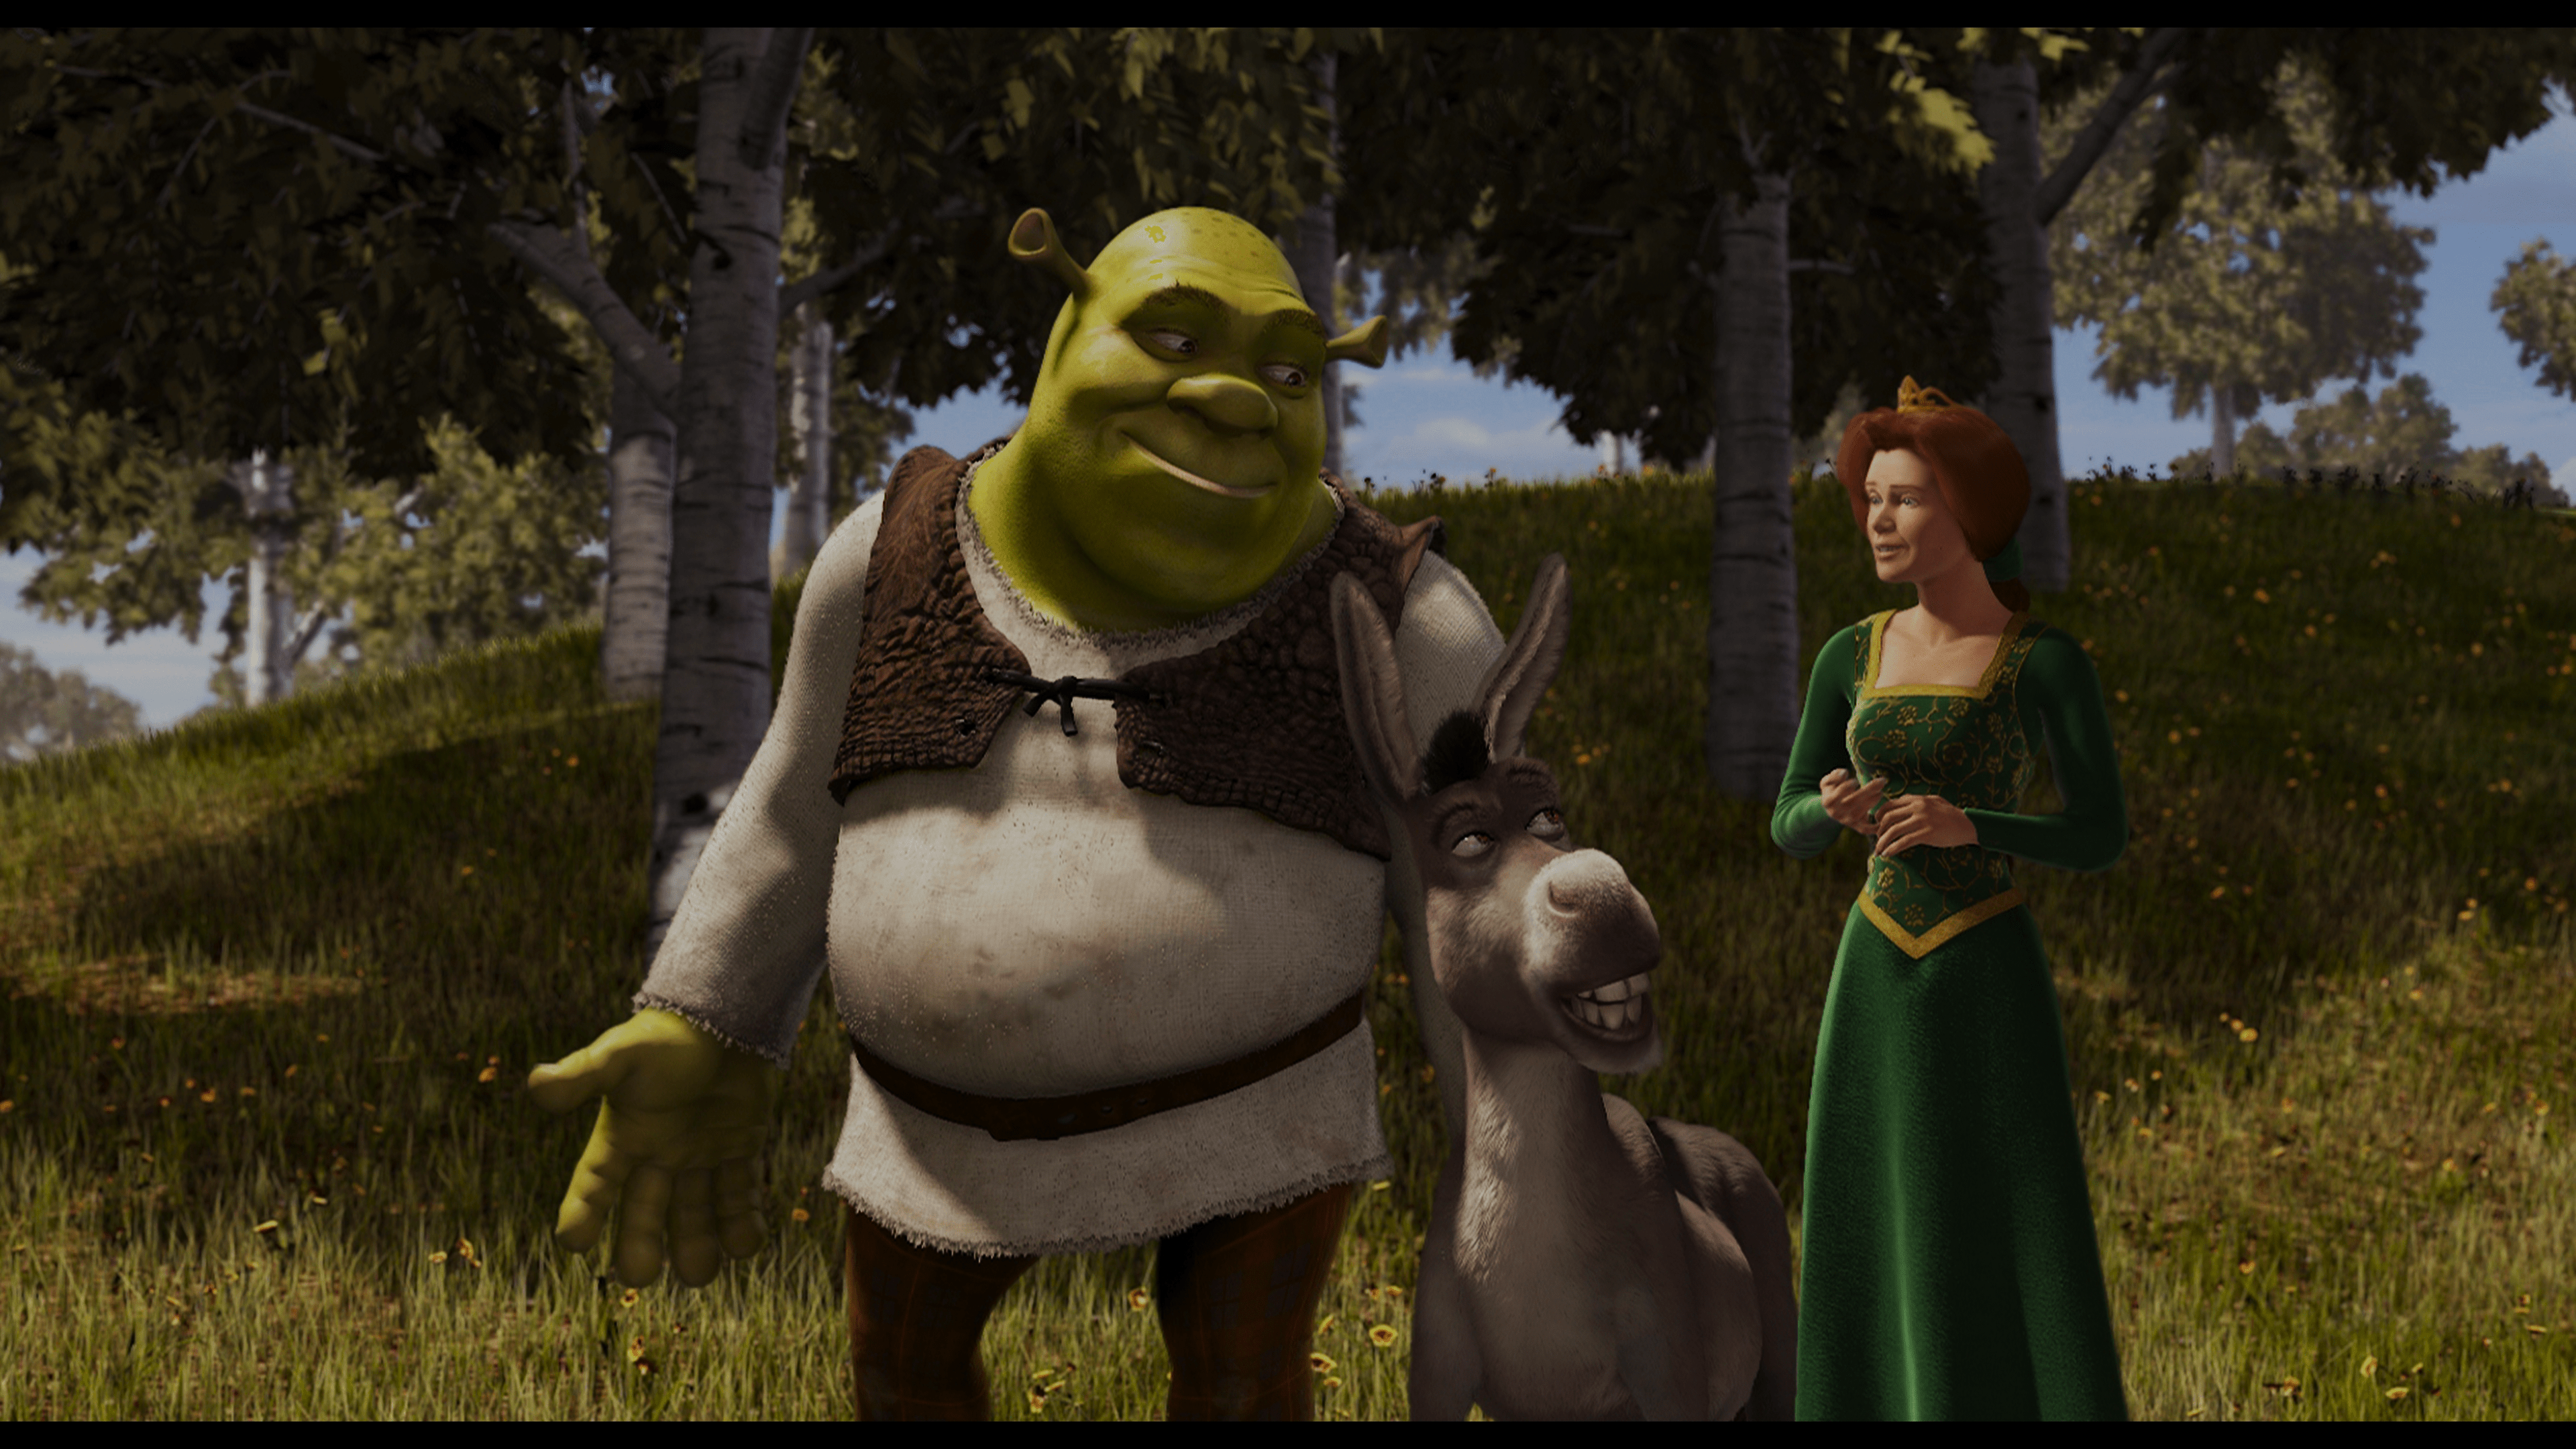 Shrek, Princess Fiona and Donkey walking together in the Shrek movie.